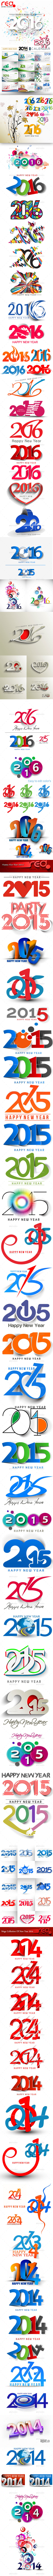 Happy New Year 2016 - 2015 - 2014